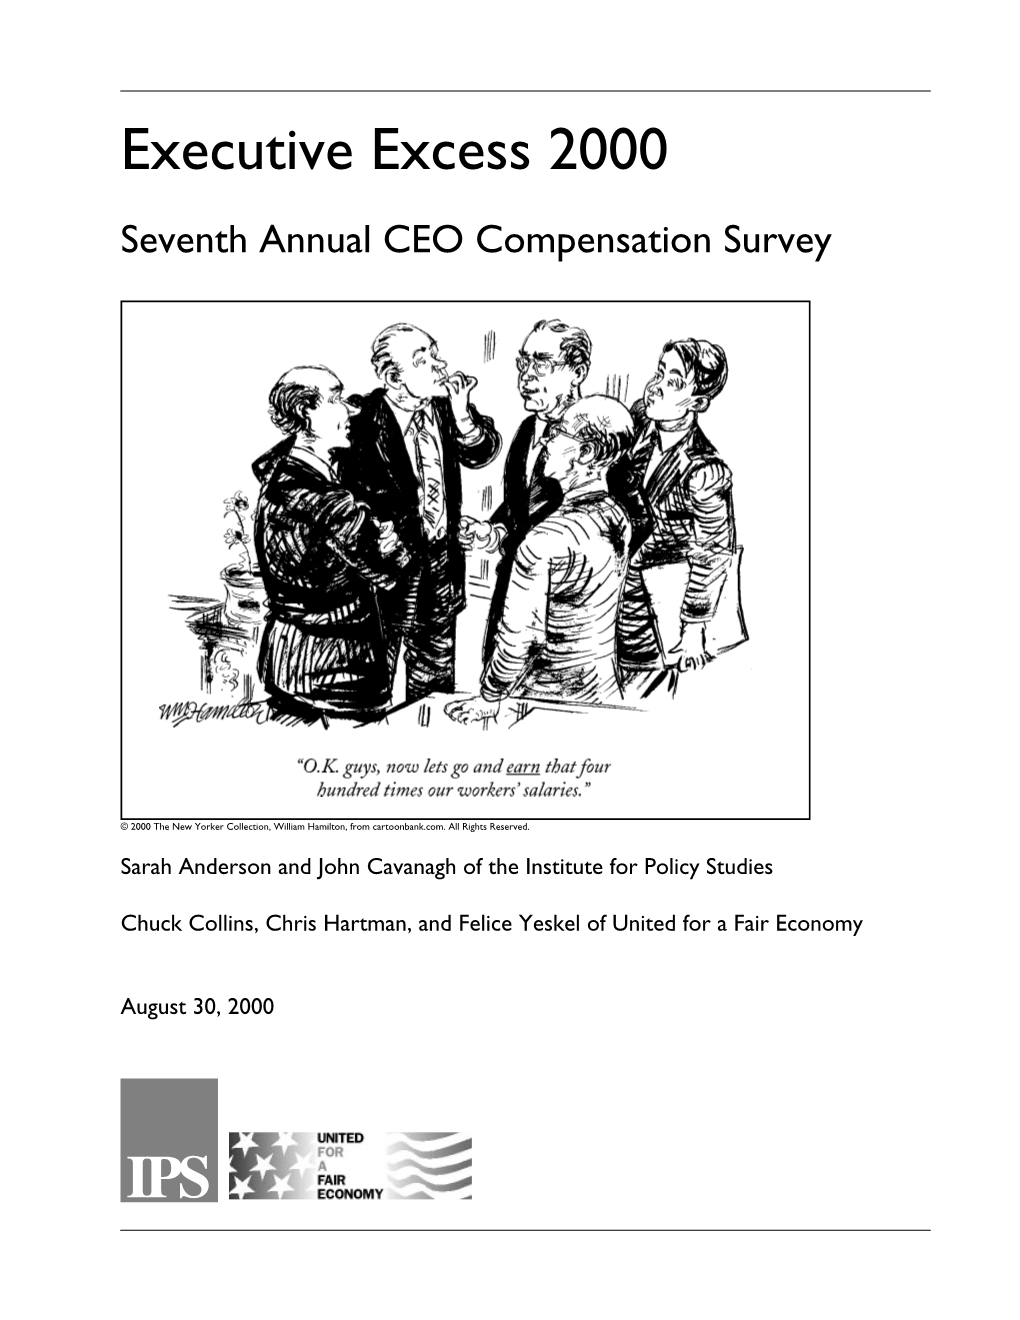 Executive Excess 2000 Seventh Annual CEO Compensation Survey